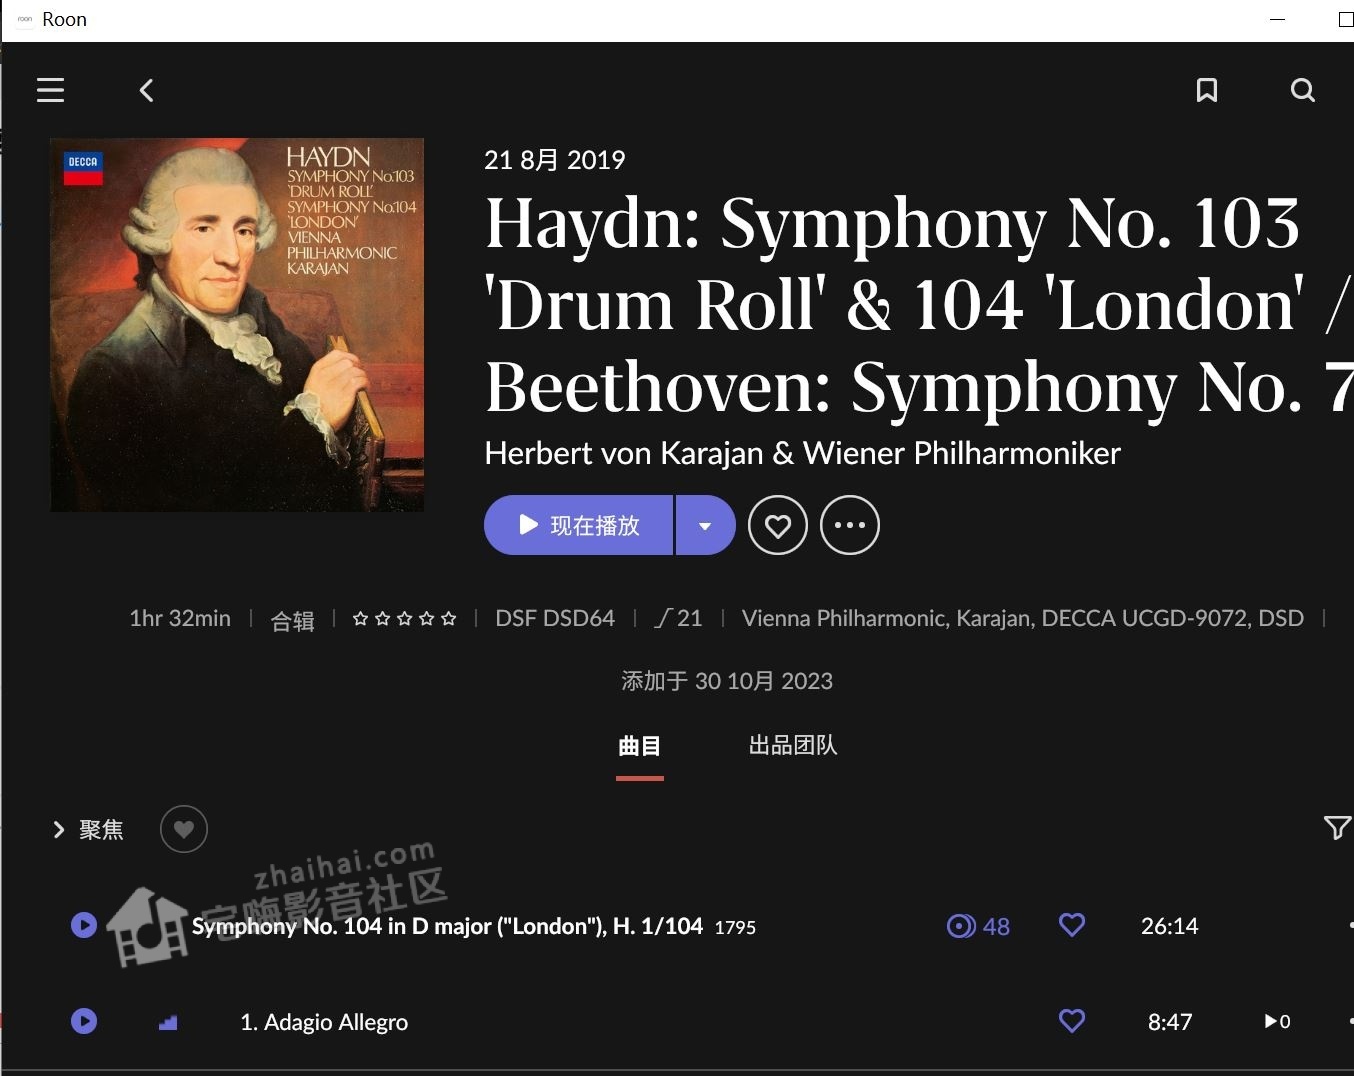 [DECCA UCGD-9072] Haydn - Symphonies Nos. 103  104; Beethoven - Symphony No. 7 Vienna Philharmonic Karajan 2019 [DSD].JPG